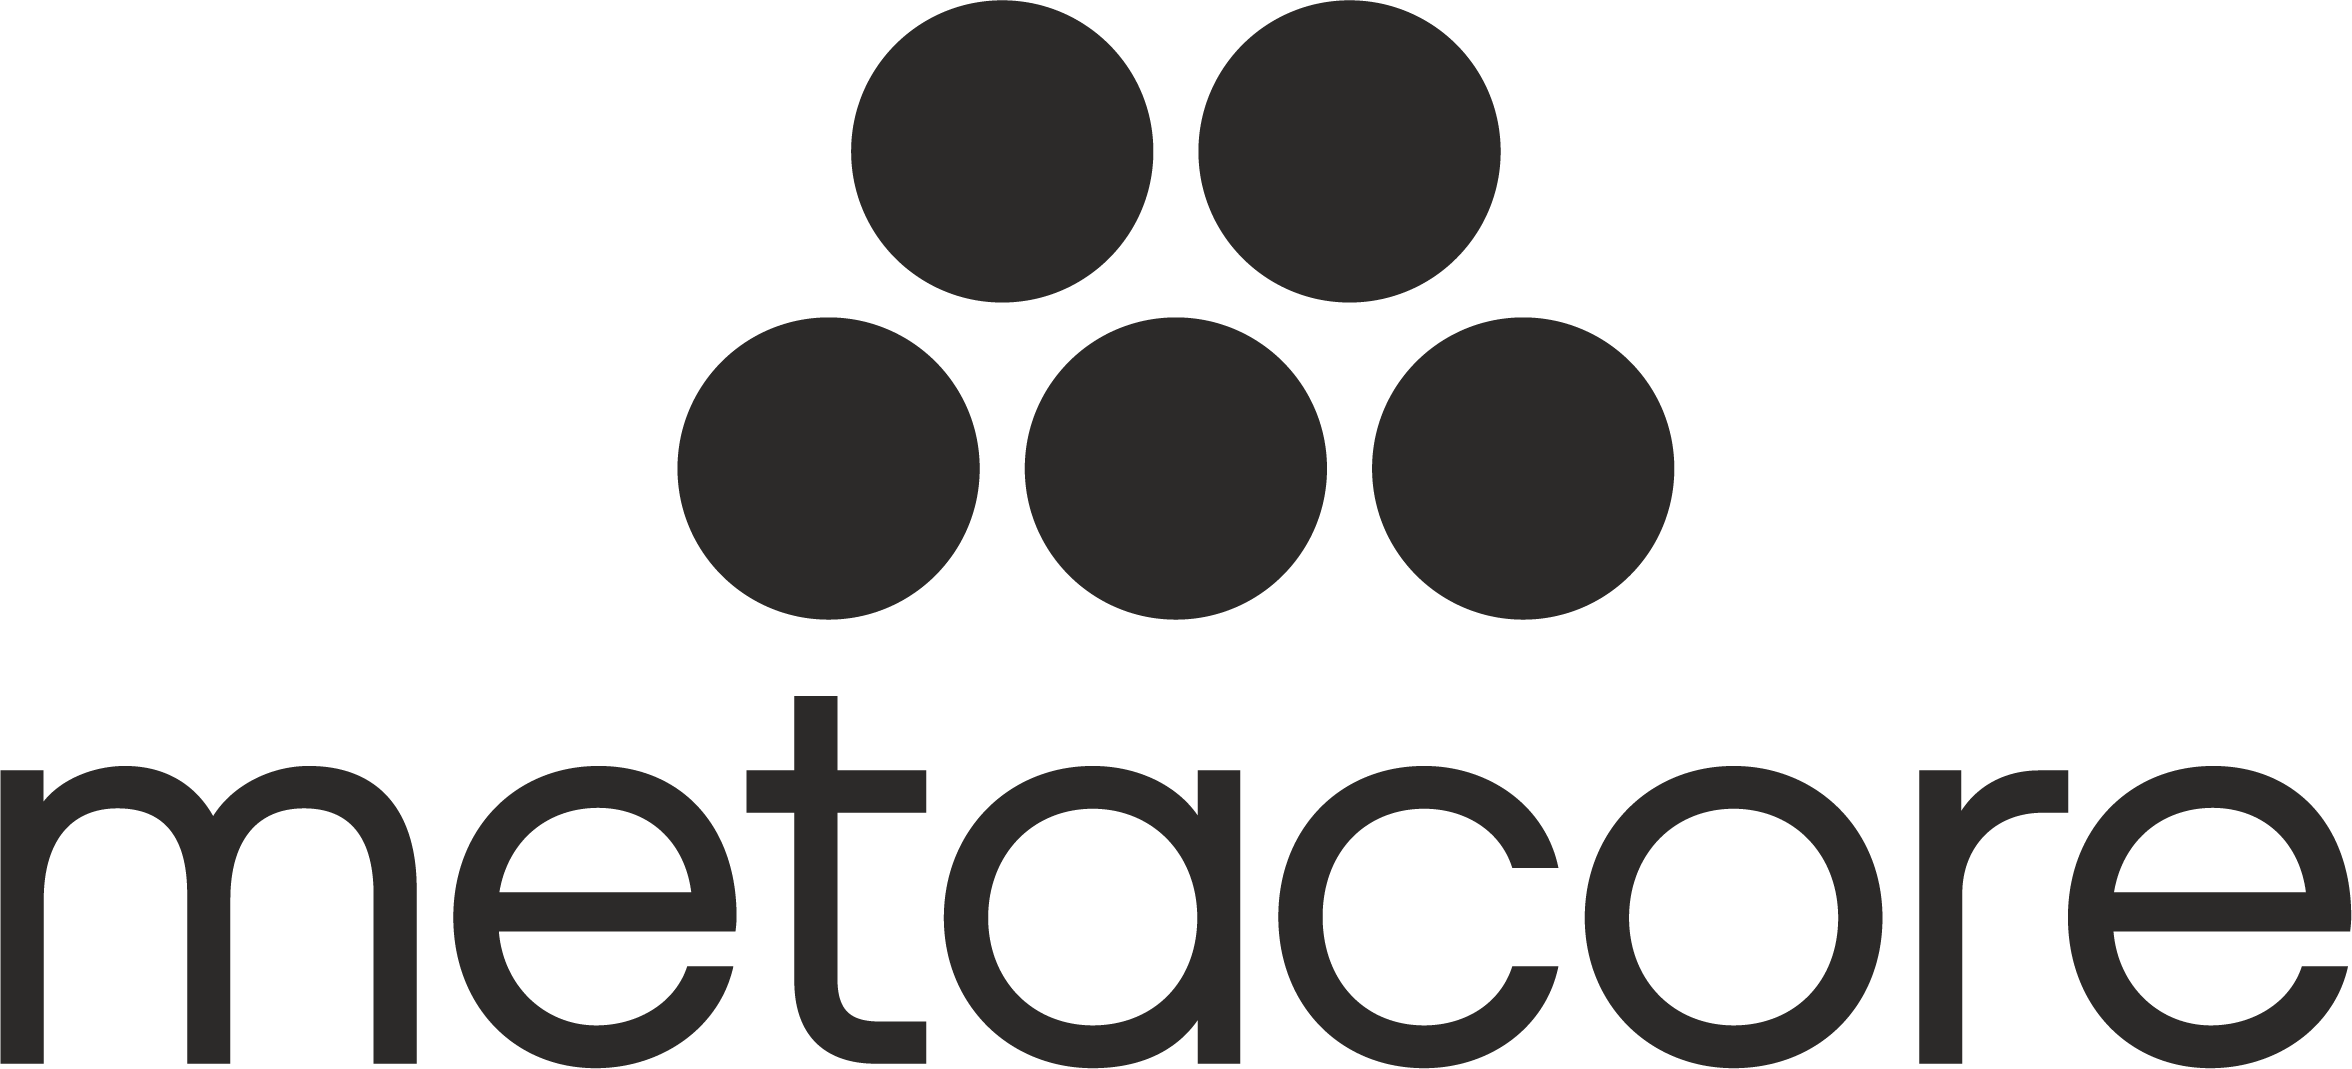 Metacore_logo_Black.png